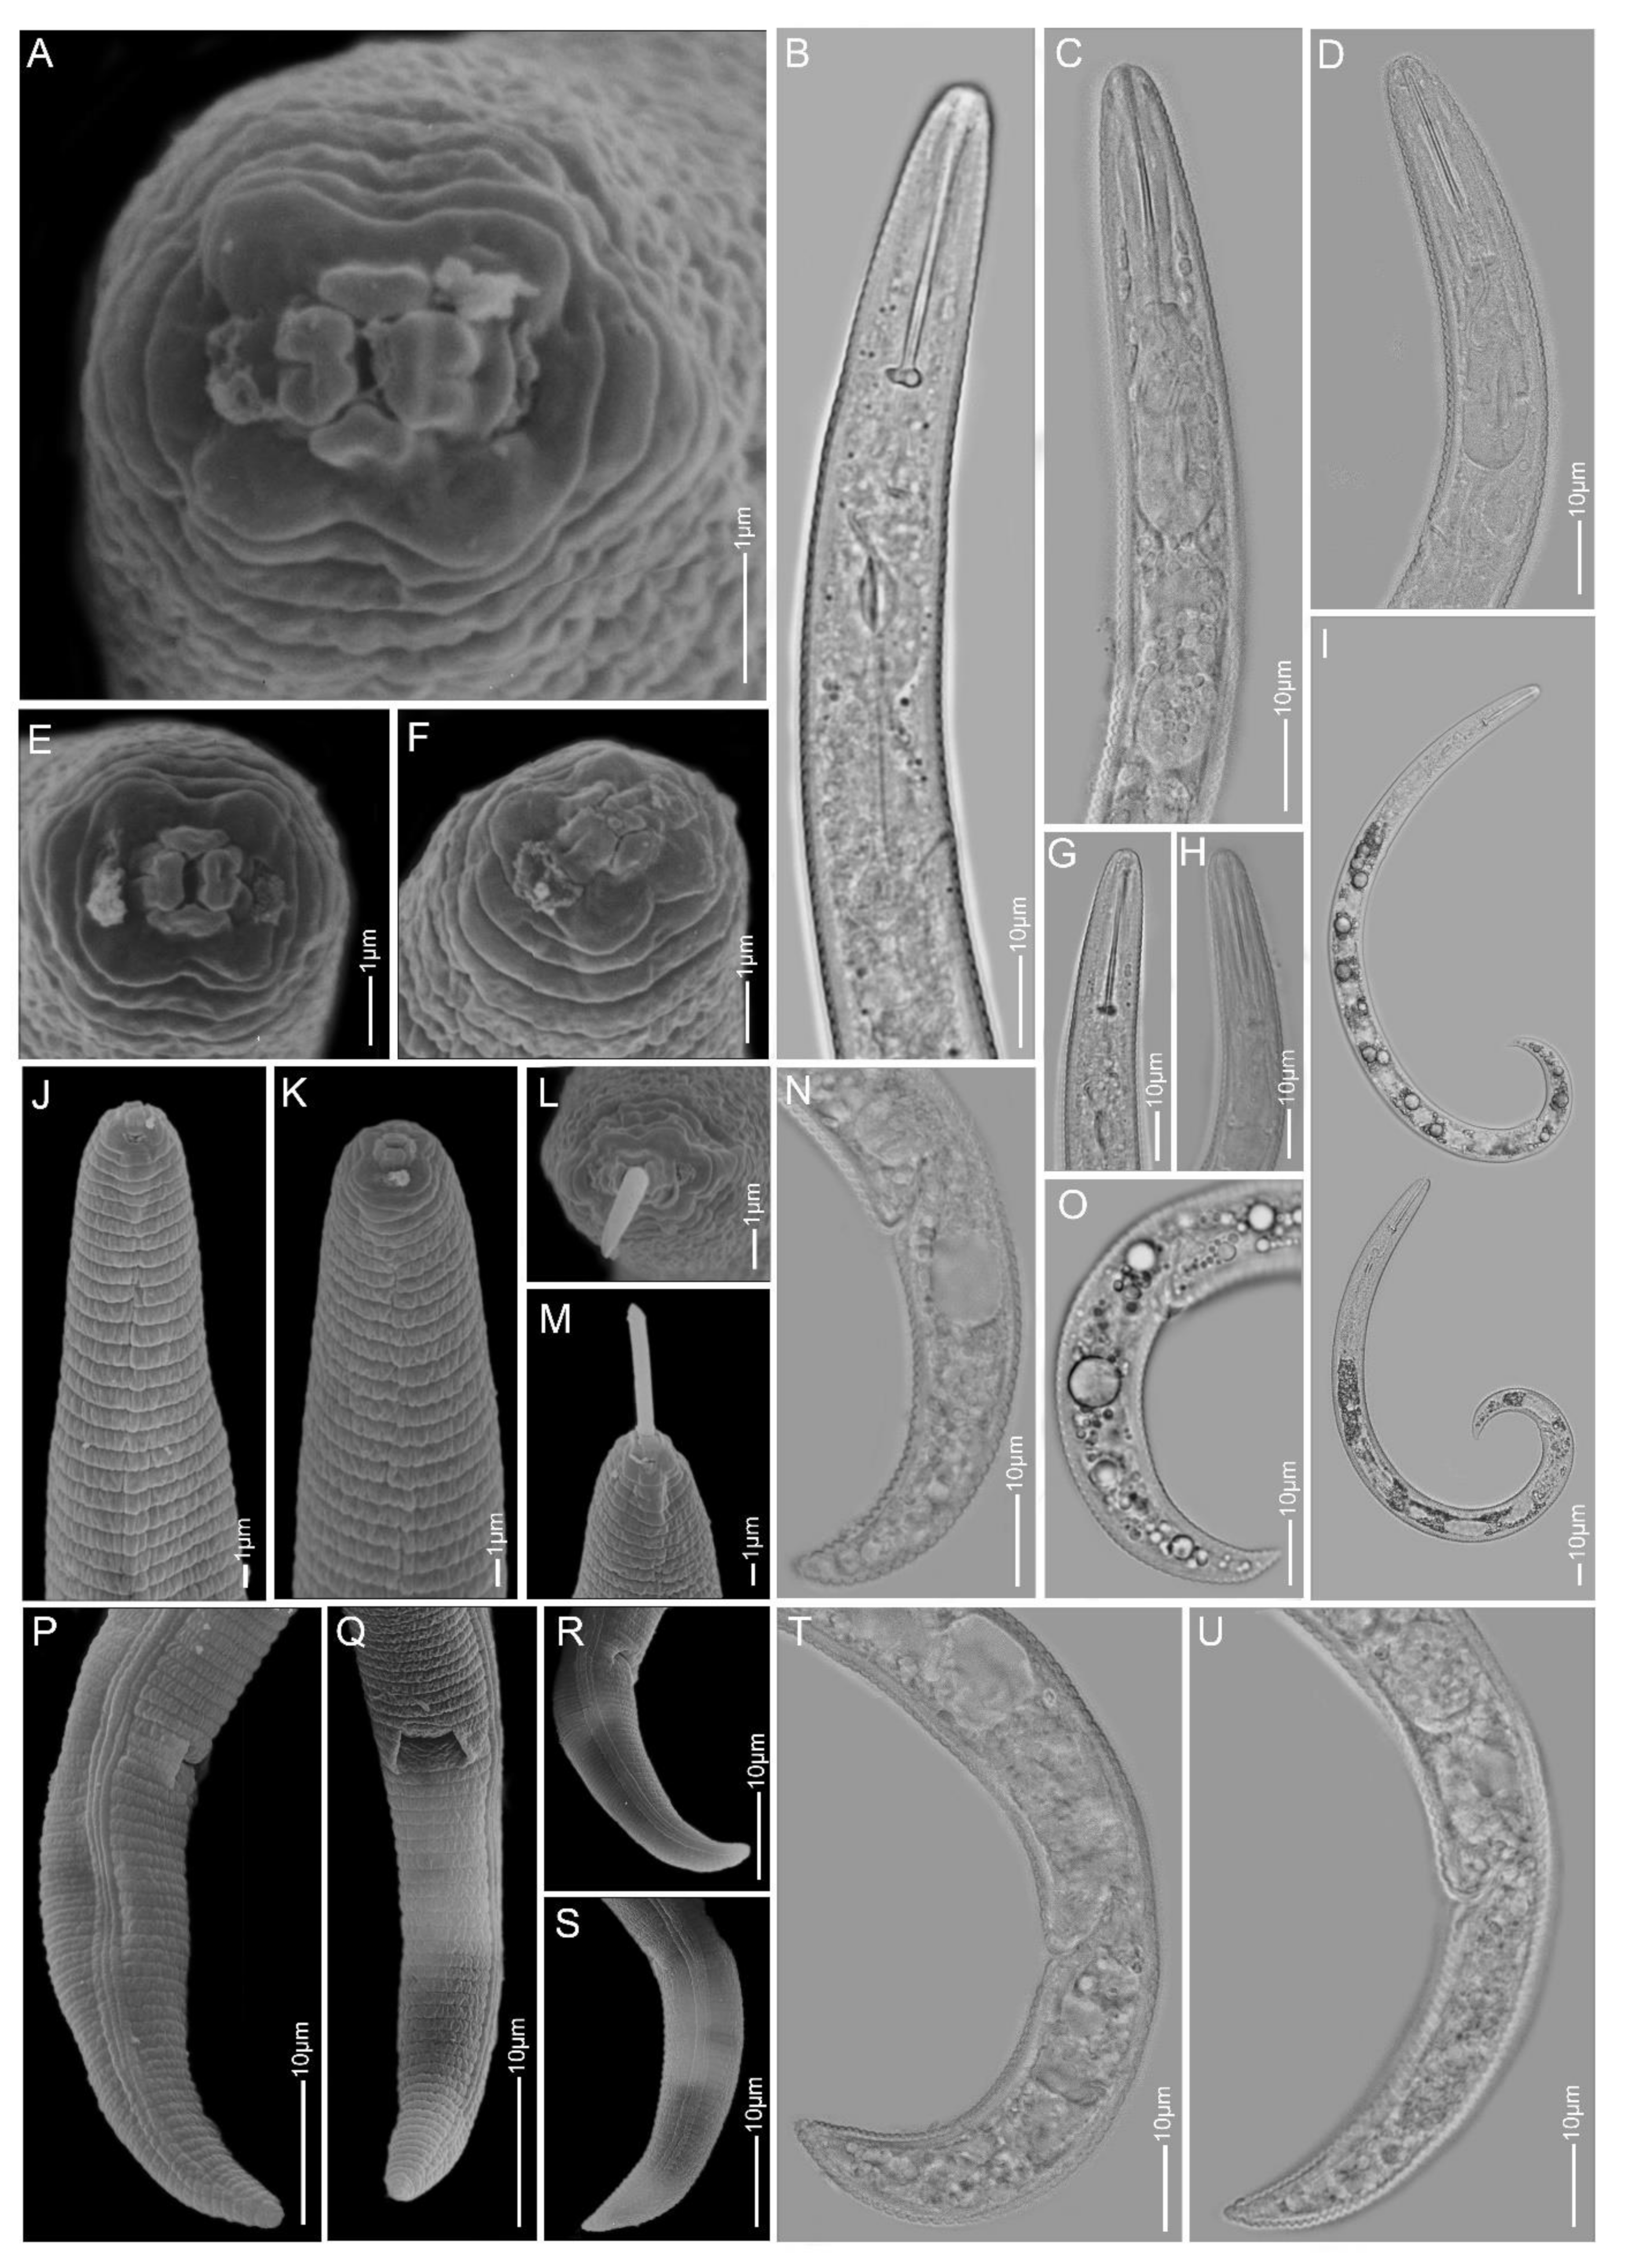 Plants Free Full Text Integrative Taxonomy And Molecular Phylogeny Of The Plant Parasitic Nematode Genus Paratylenchus Nematoda Paratylenchinae Linking Species With Molecular Barcodes Html